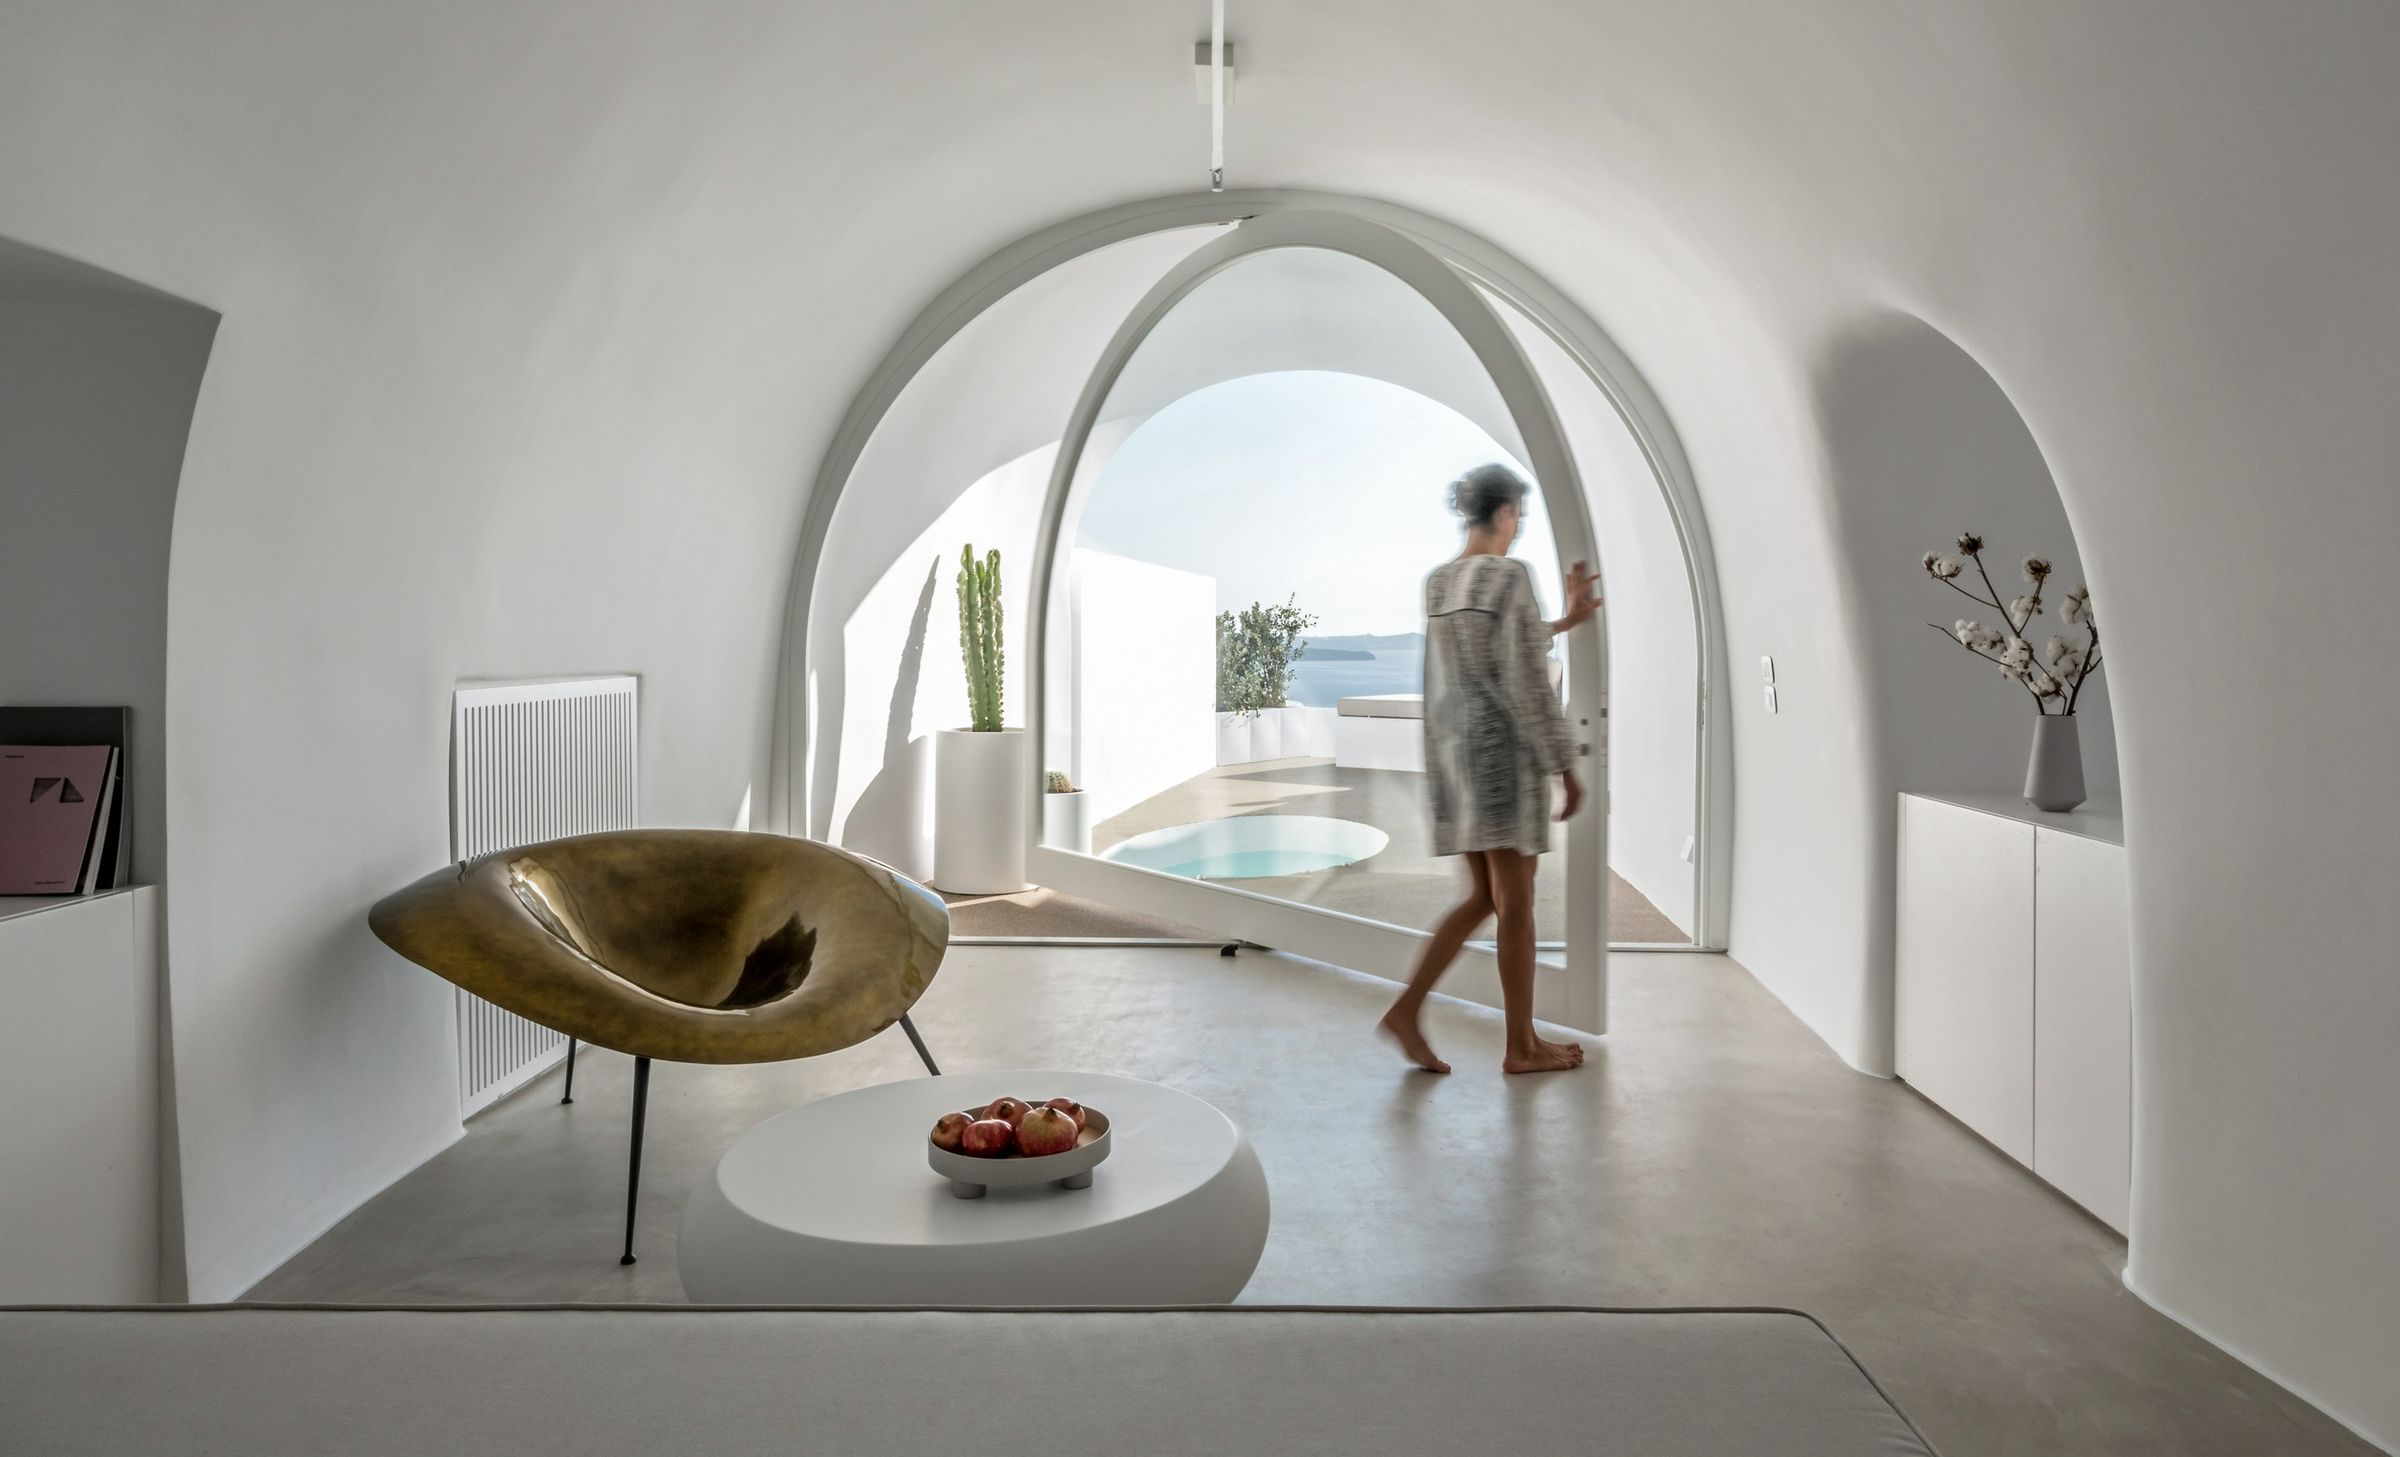 Saint Hotel, Oia, Santorini, Greece / Kapsimalis Architects